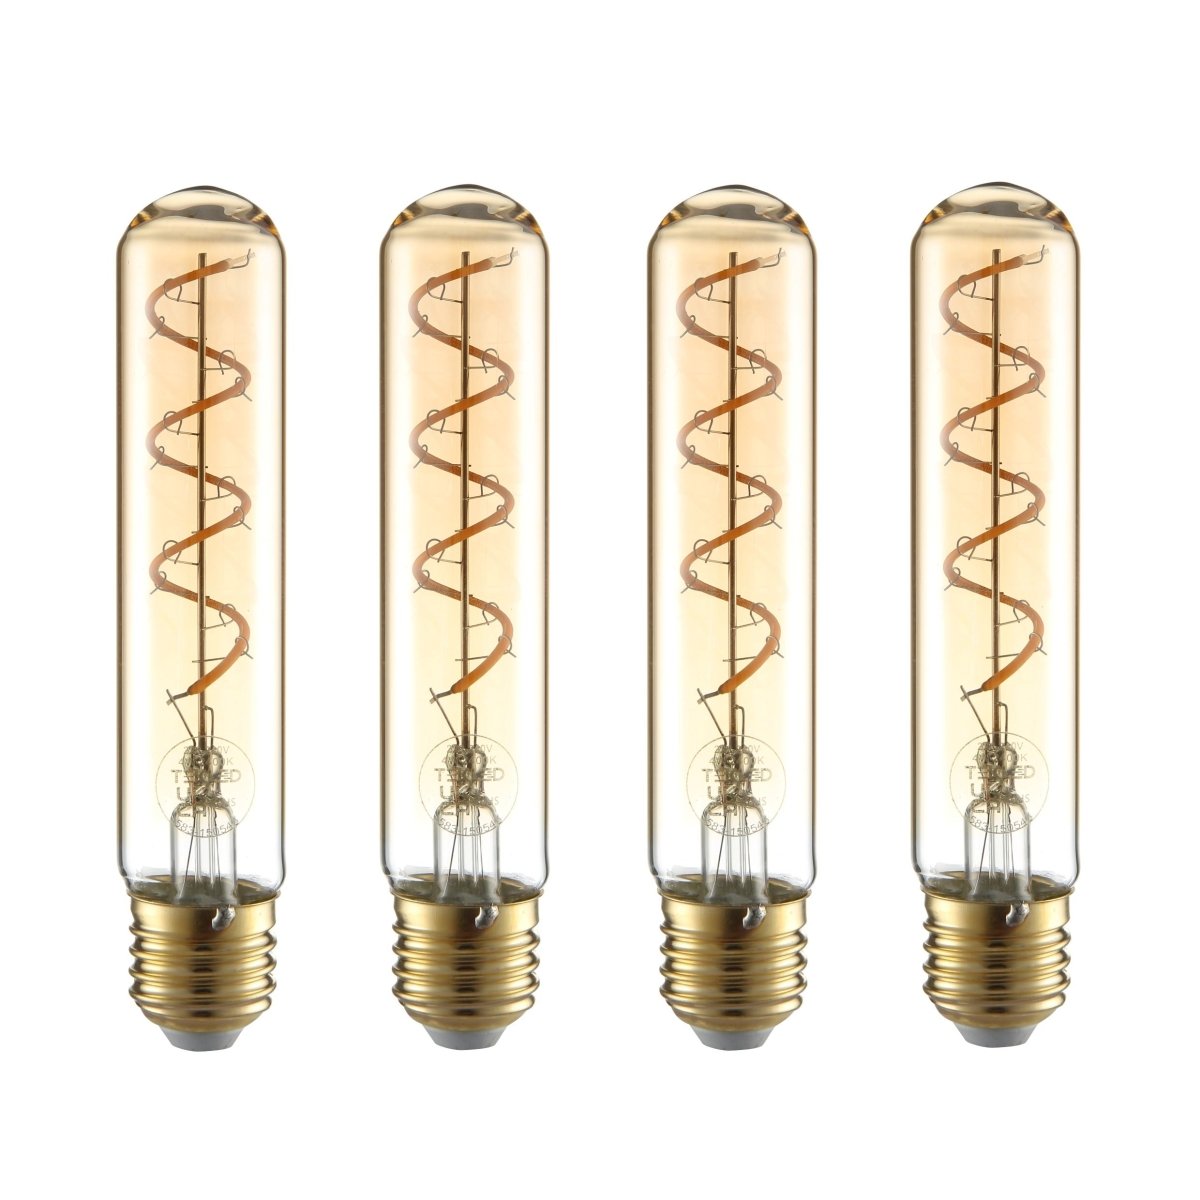 Main image of LED Dimmable Filament Bulb T30 Tubular E27 Edison Screw 4W 240lm 150mm Warm White 2400K Amber Pack of 4 | TEKLED 583-150545